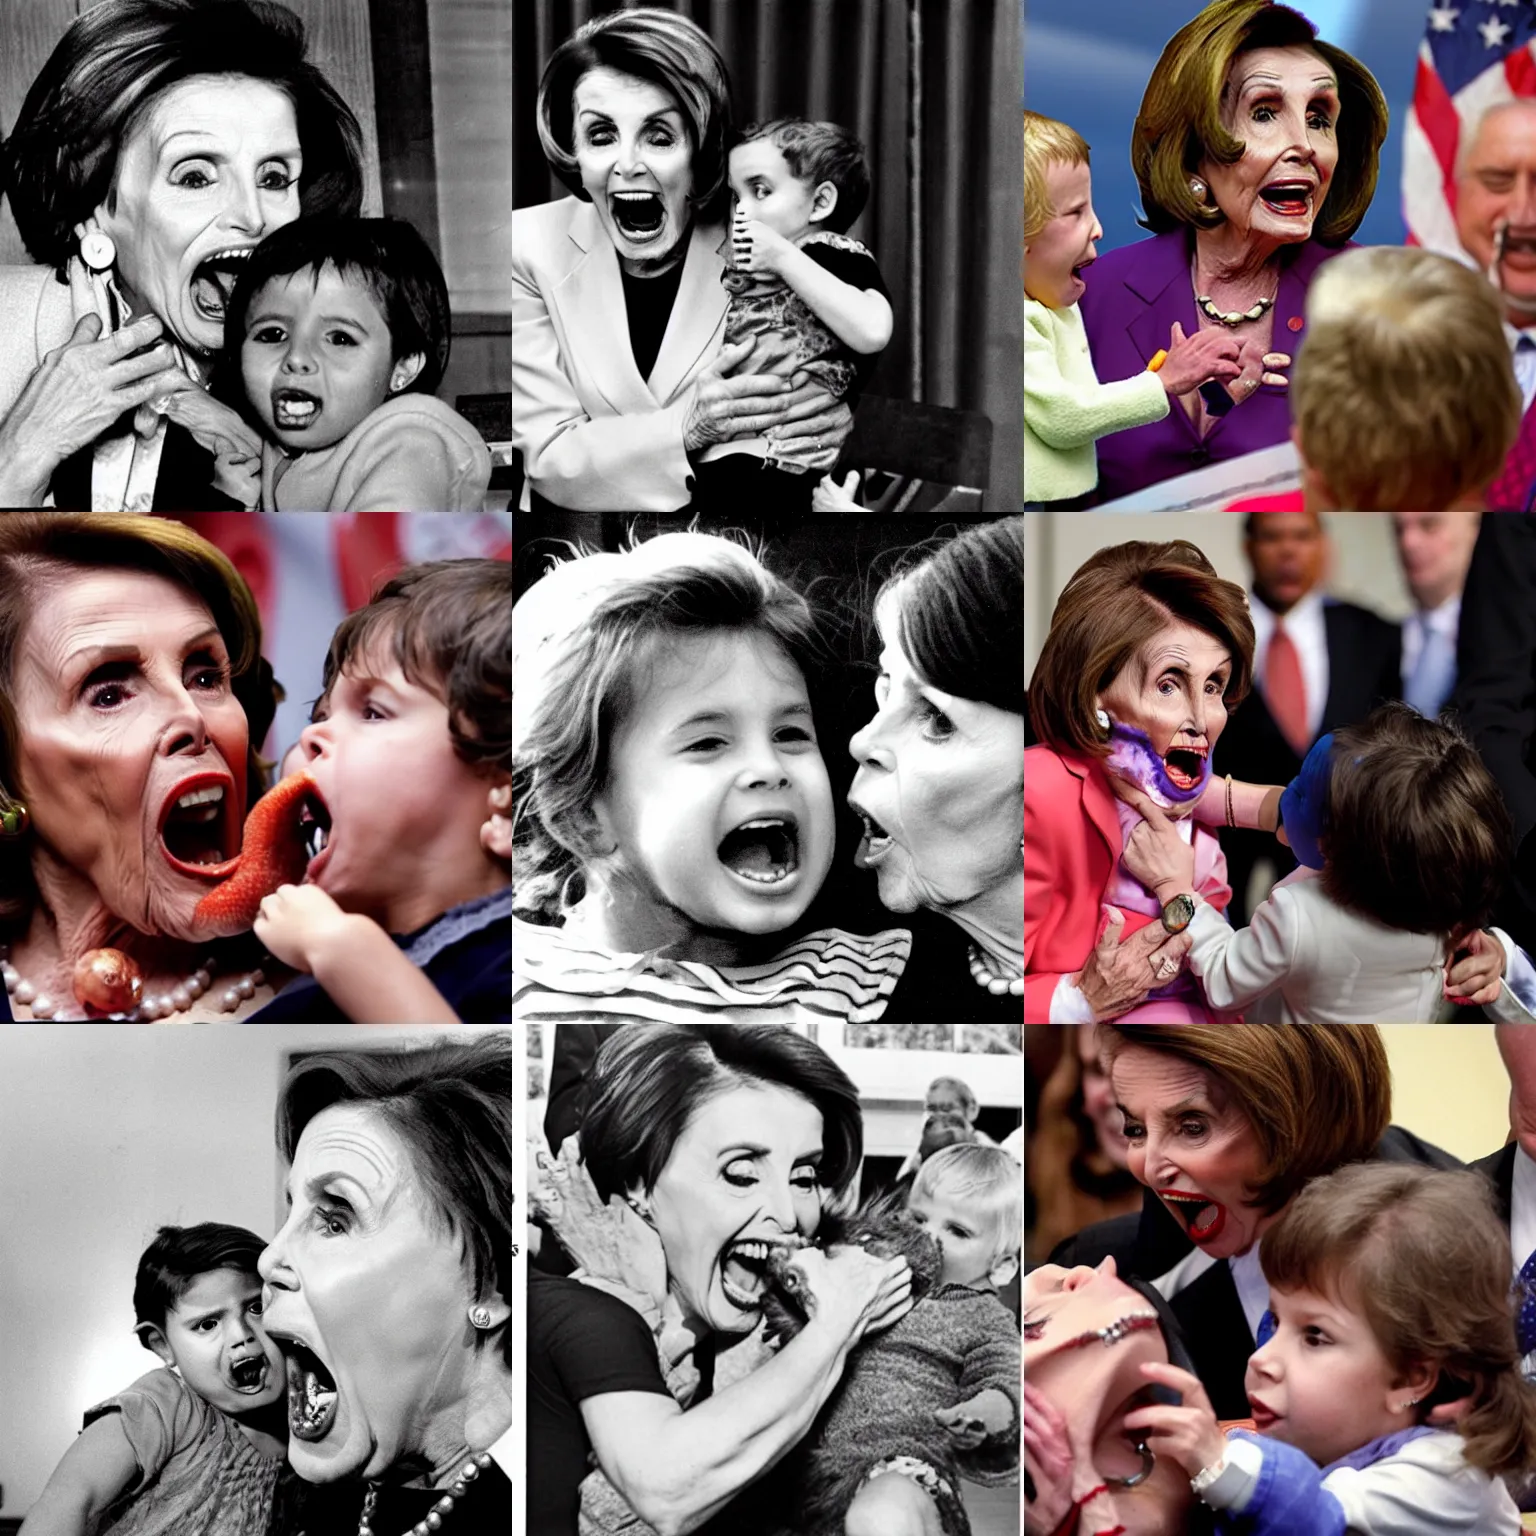 Prompt: evil nancy pelosi devouring a small child